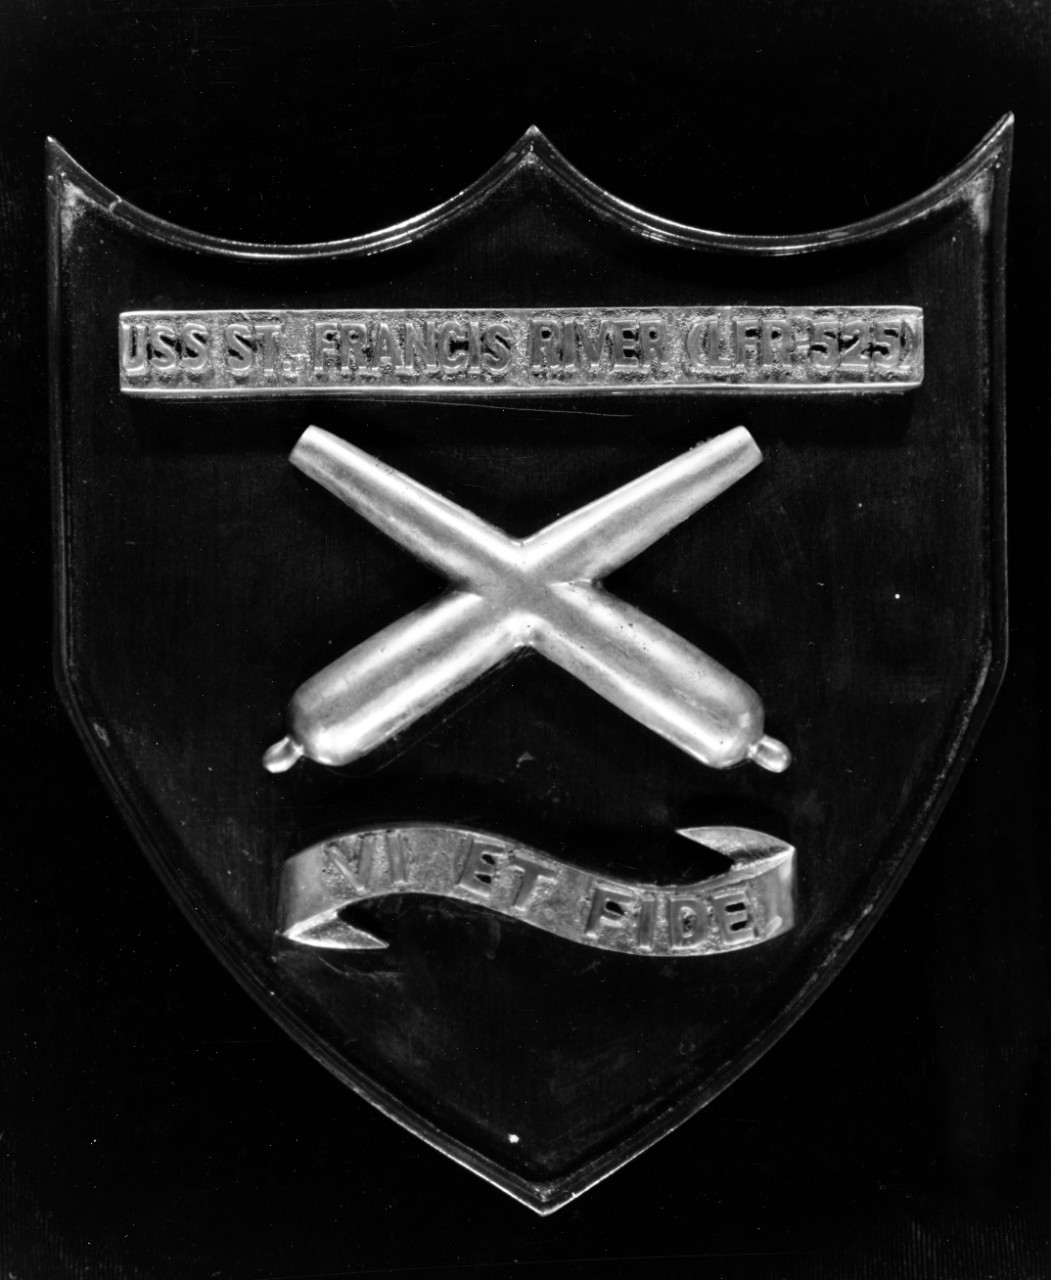 Insignia:  USS ST. FRANCIS RIVER (LFR-525)